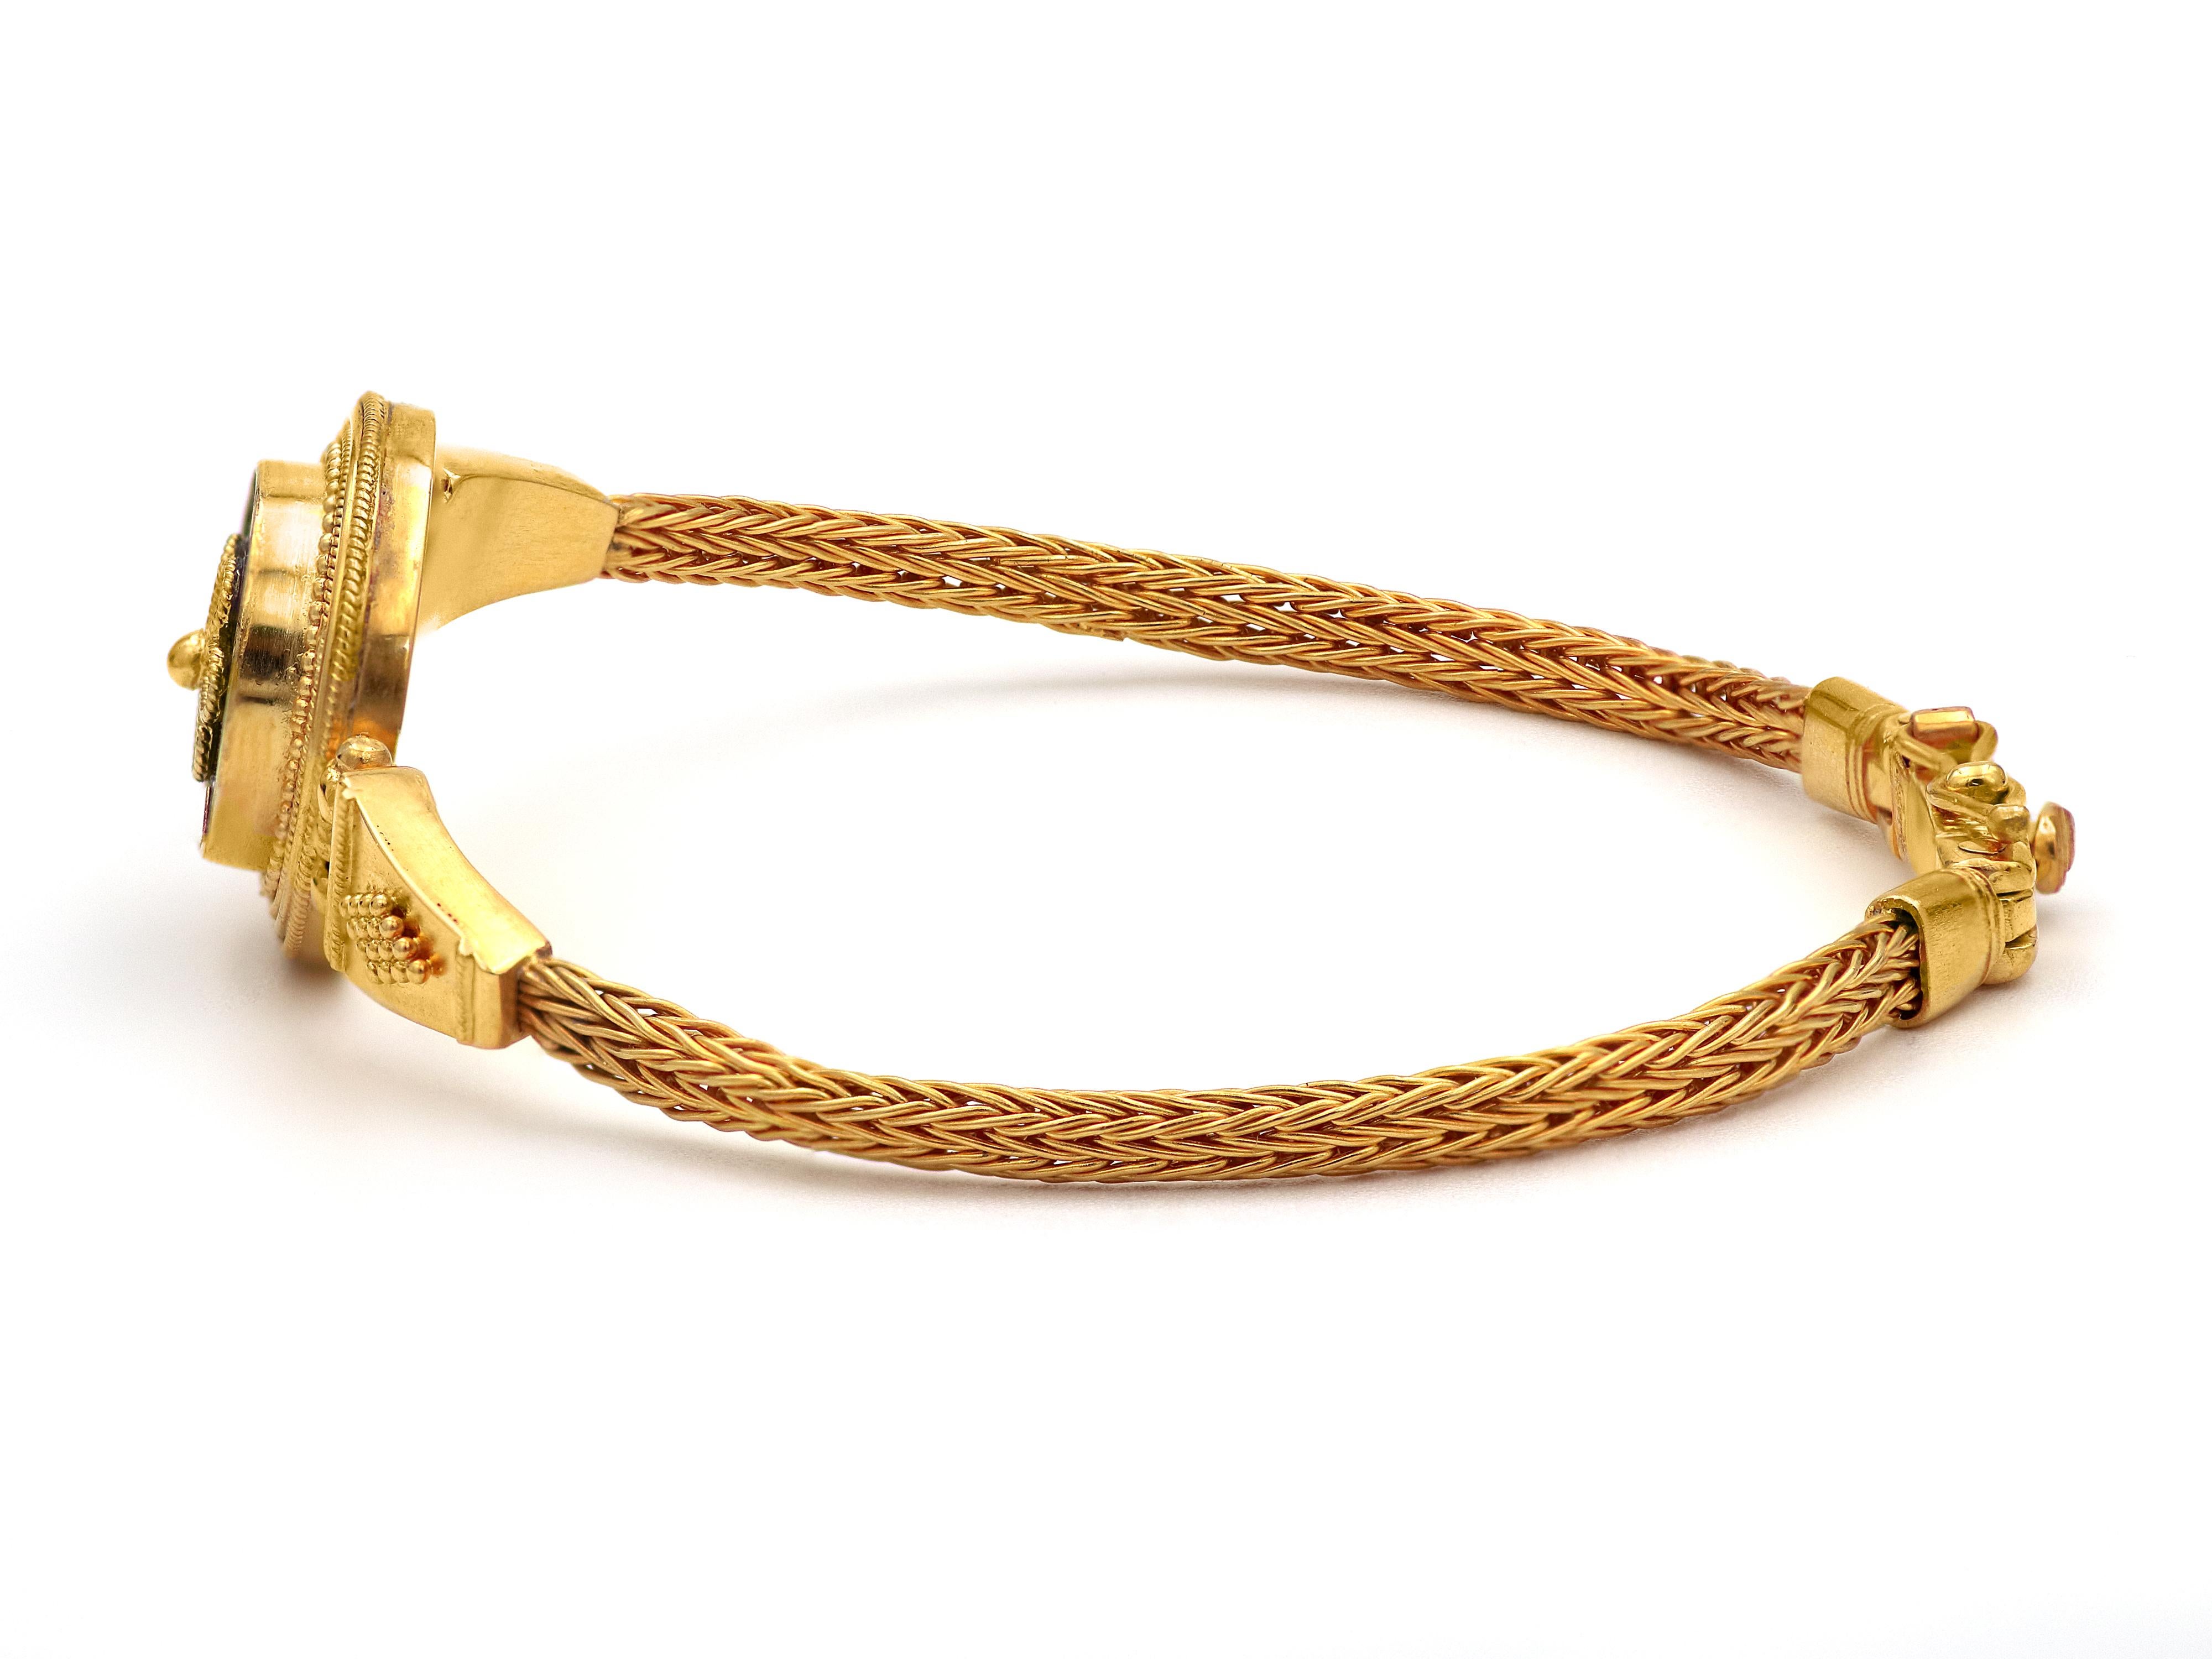 22k gold bracelet designs with price